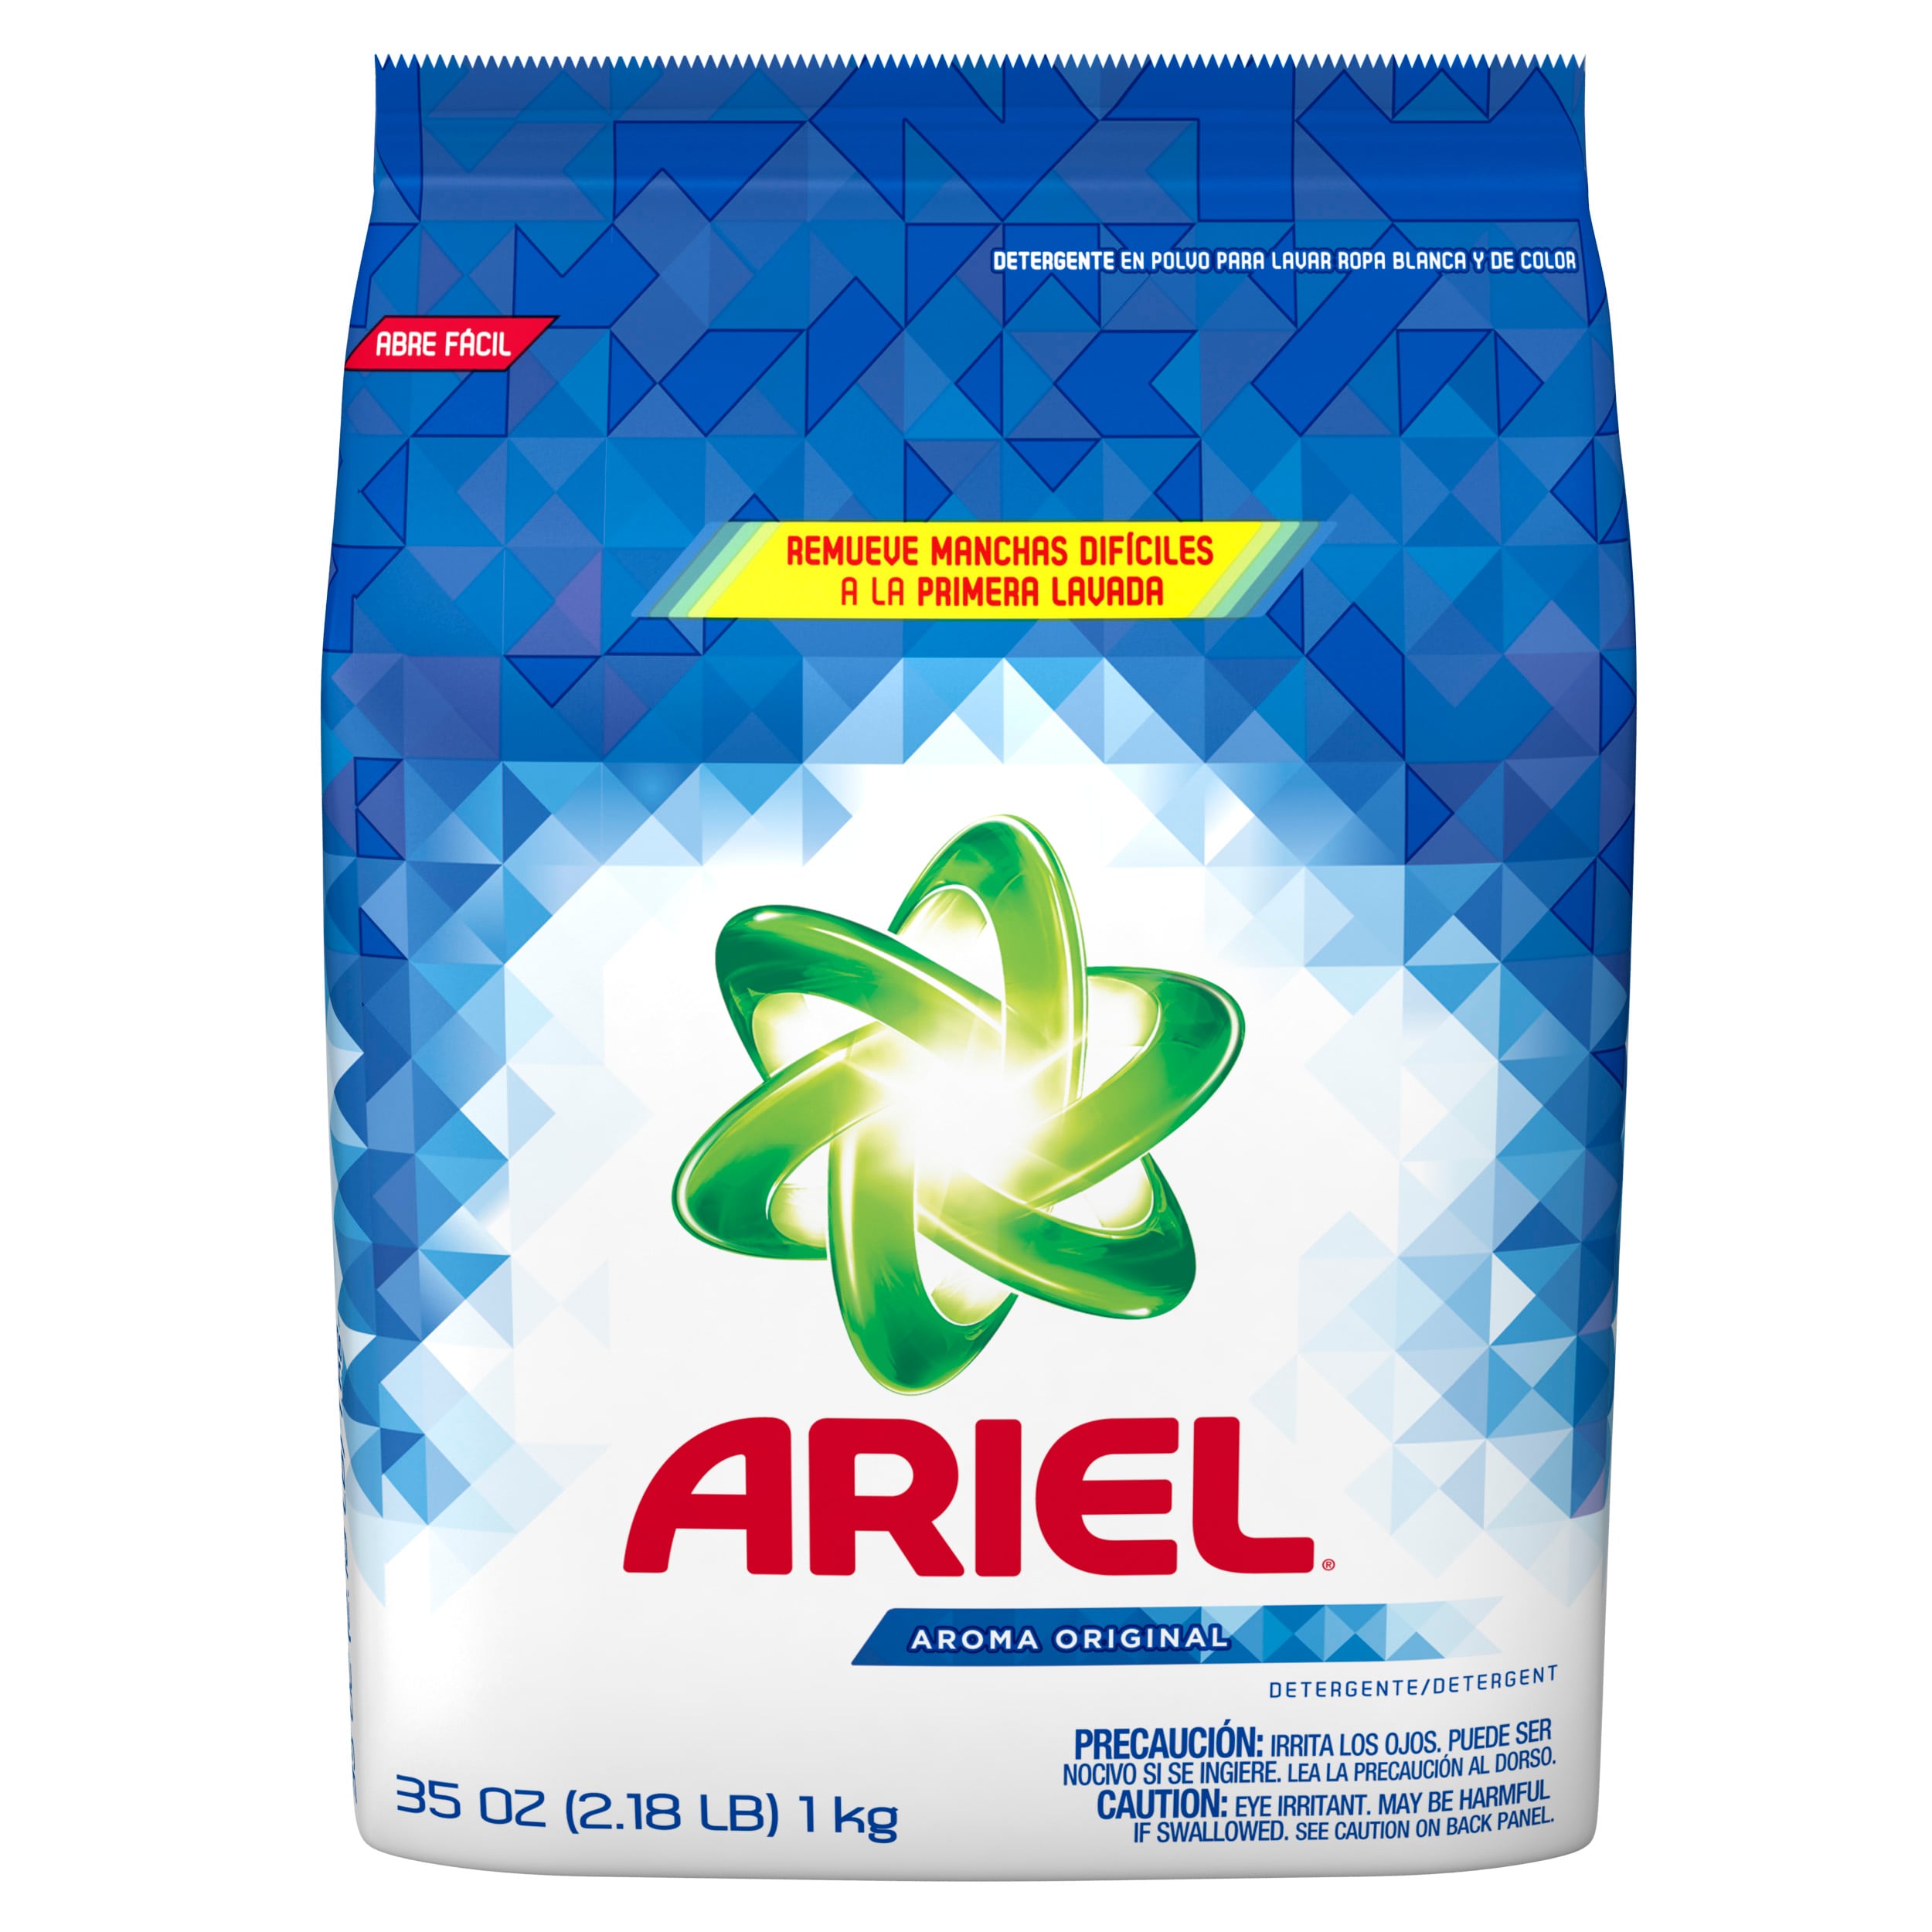 ARIEL Original Laundry Detergent in the Laundry Detergent Lowes.com